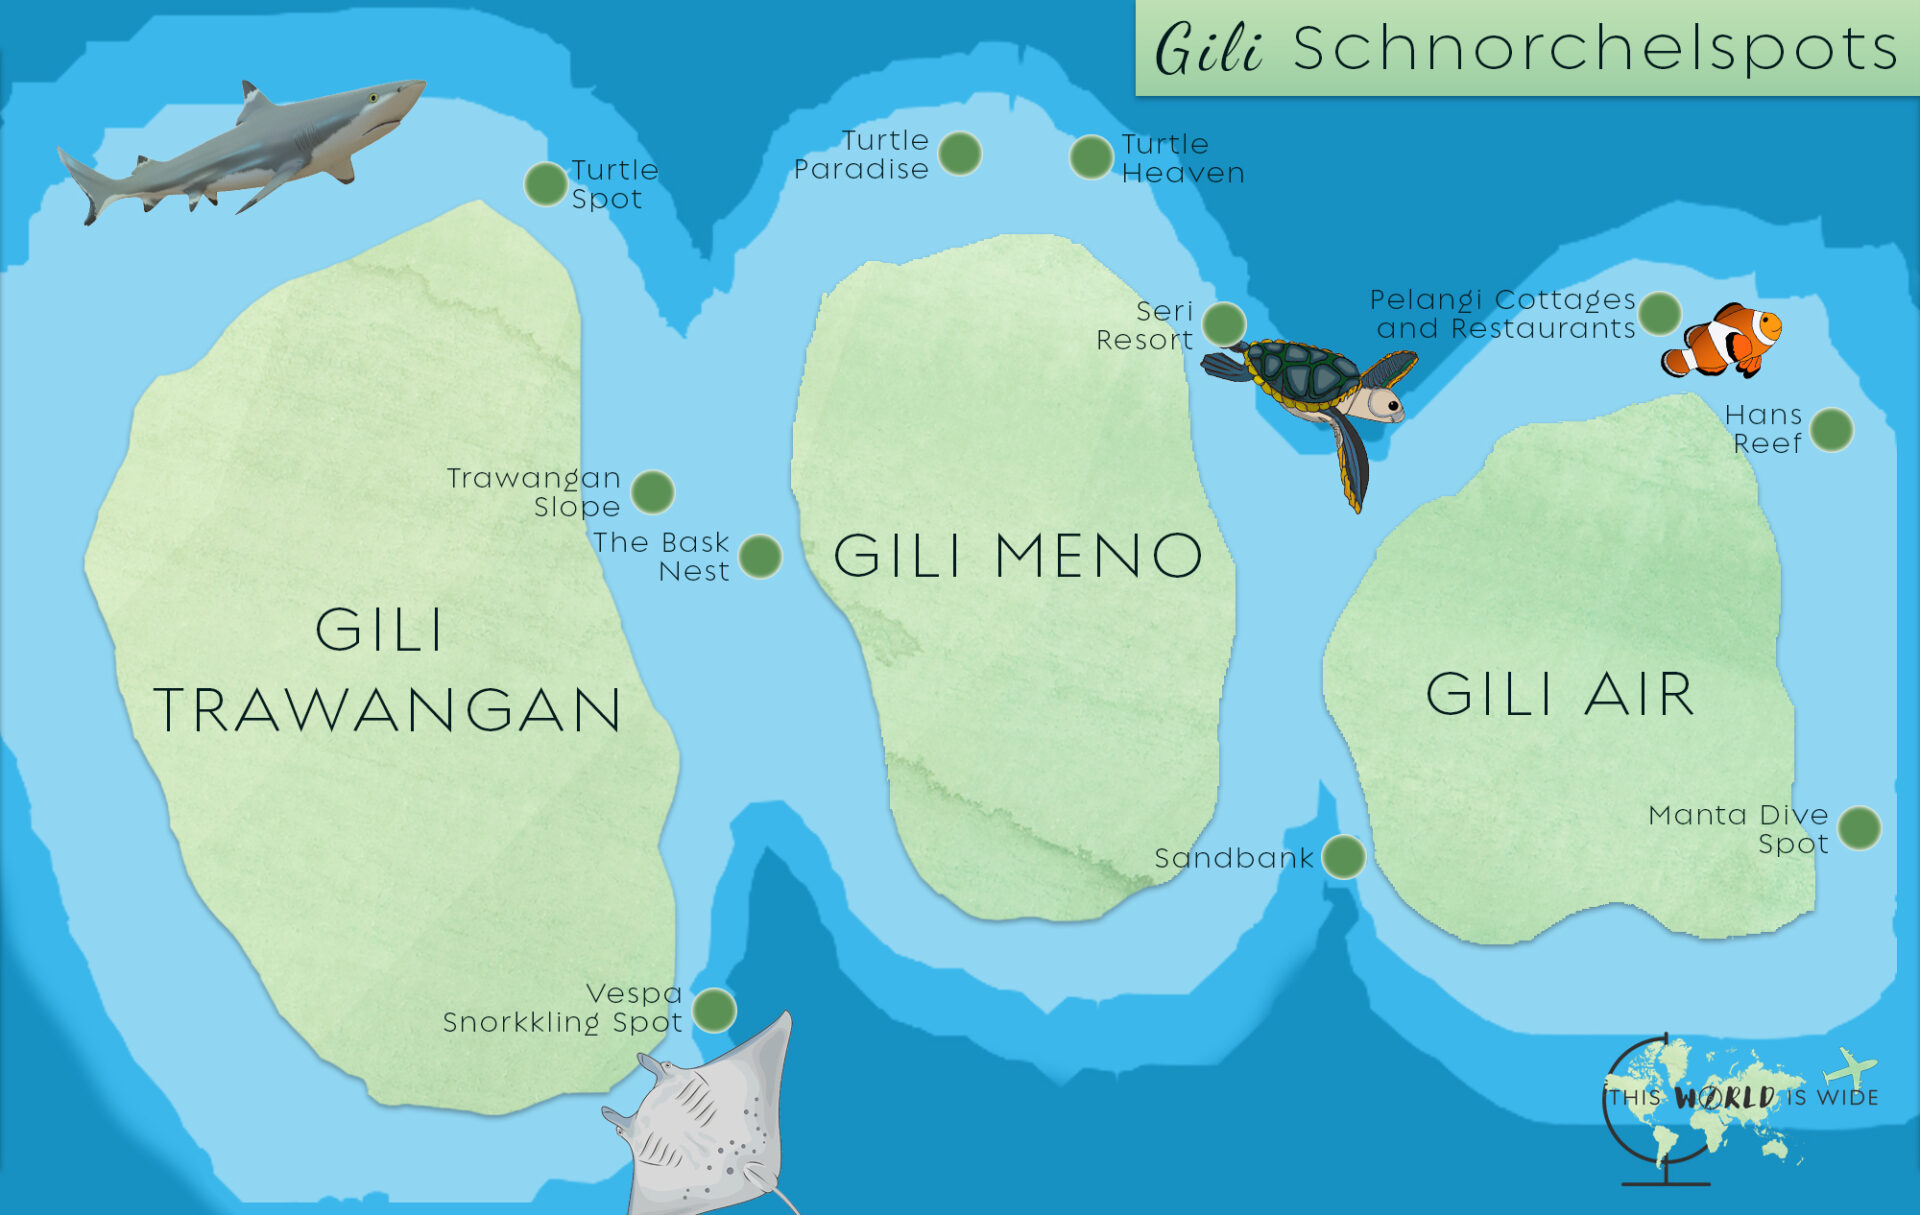 Gili Inseln Schnorcheln Gili Islands Schnorchelspots Gili Islands Snorkeling